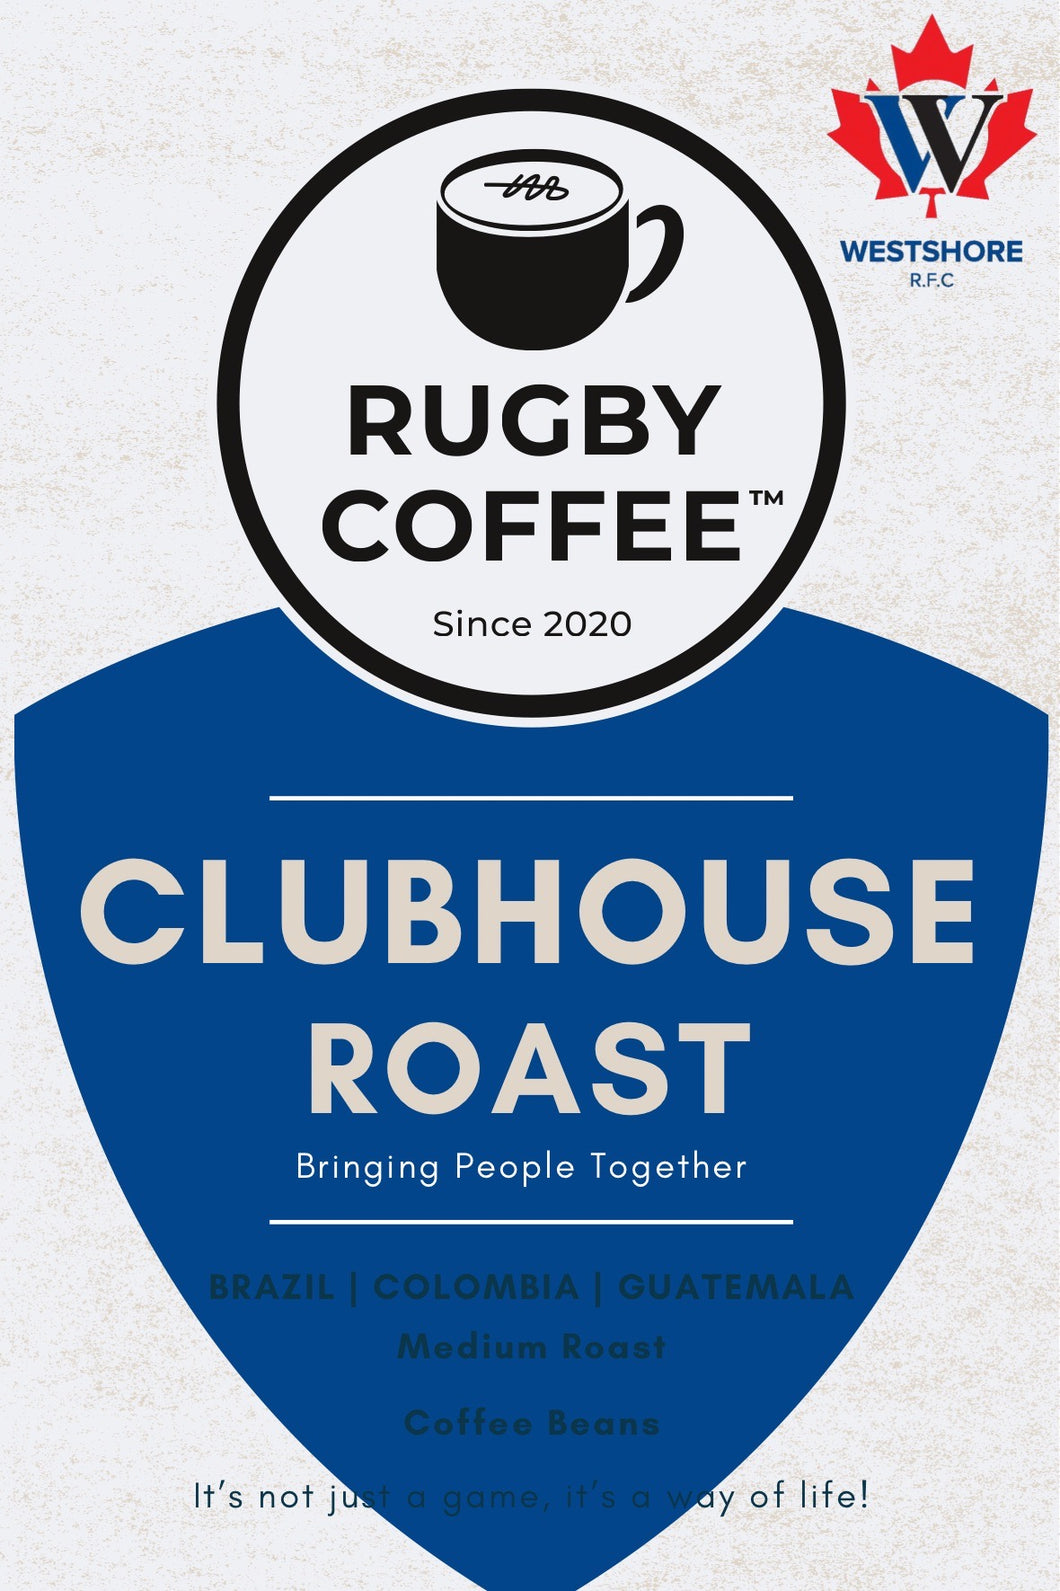 WESTSHORE RFC Clubhouse Roast 1lb Coffee